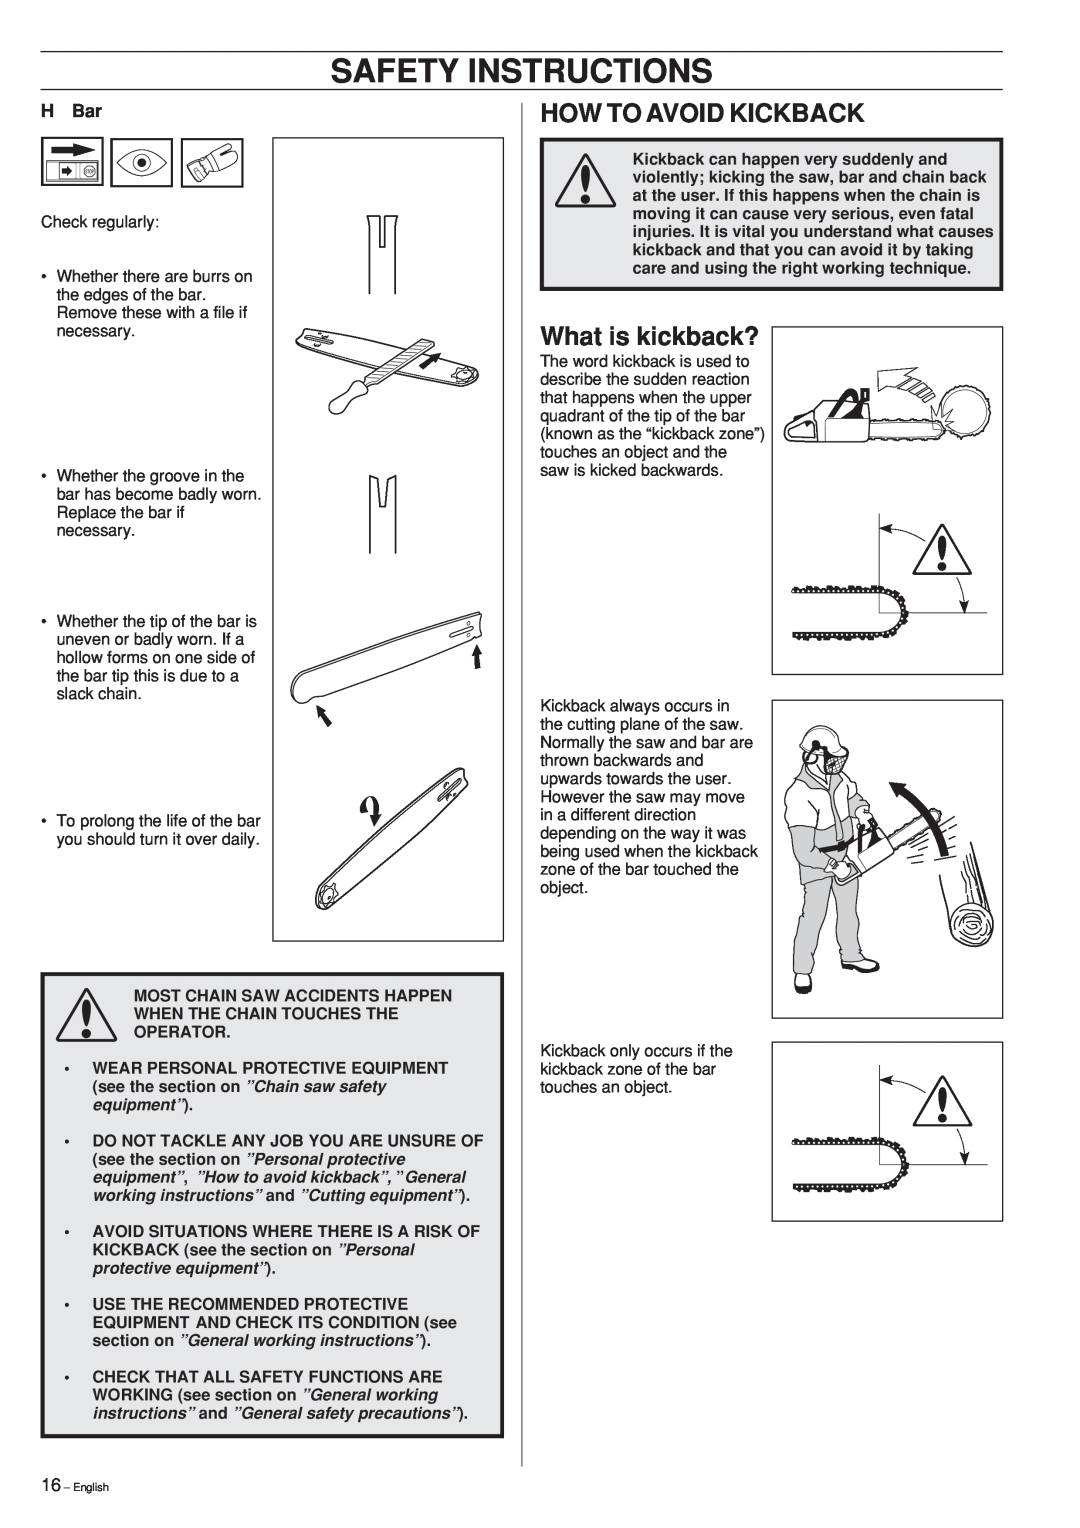 Husqvarna 55 manual Safety Instructions, How To Avoid Kickback, What is kickback?, H Bar 